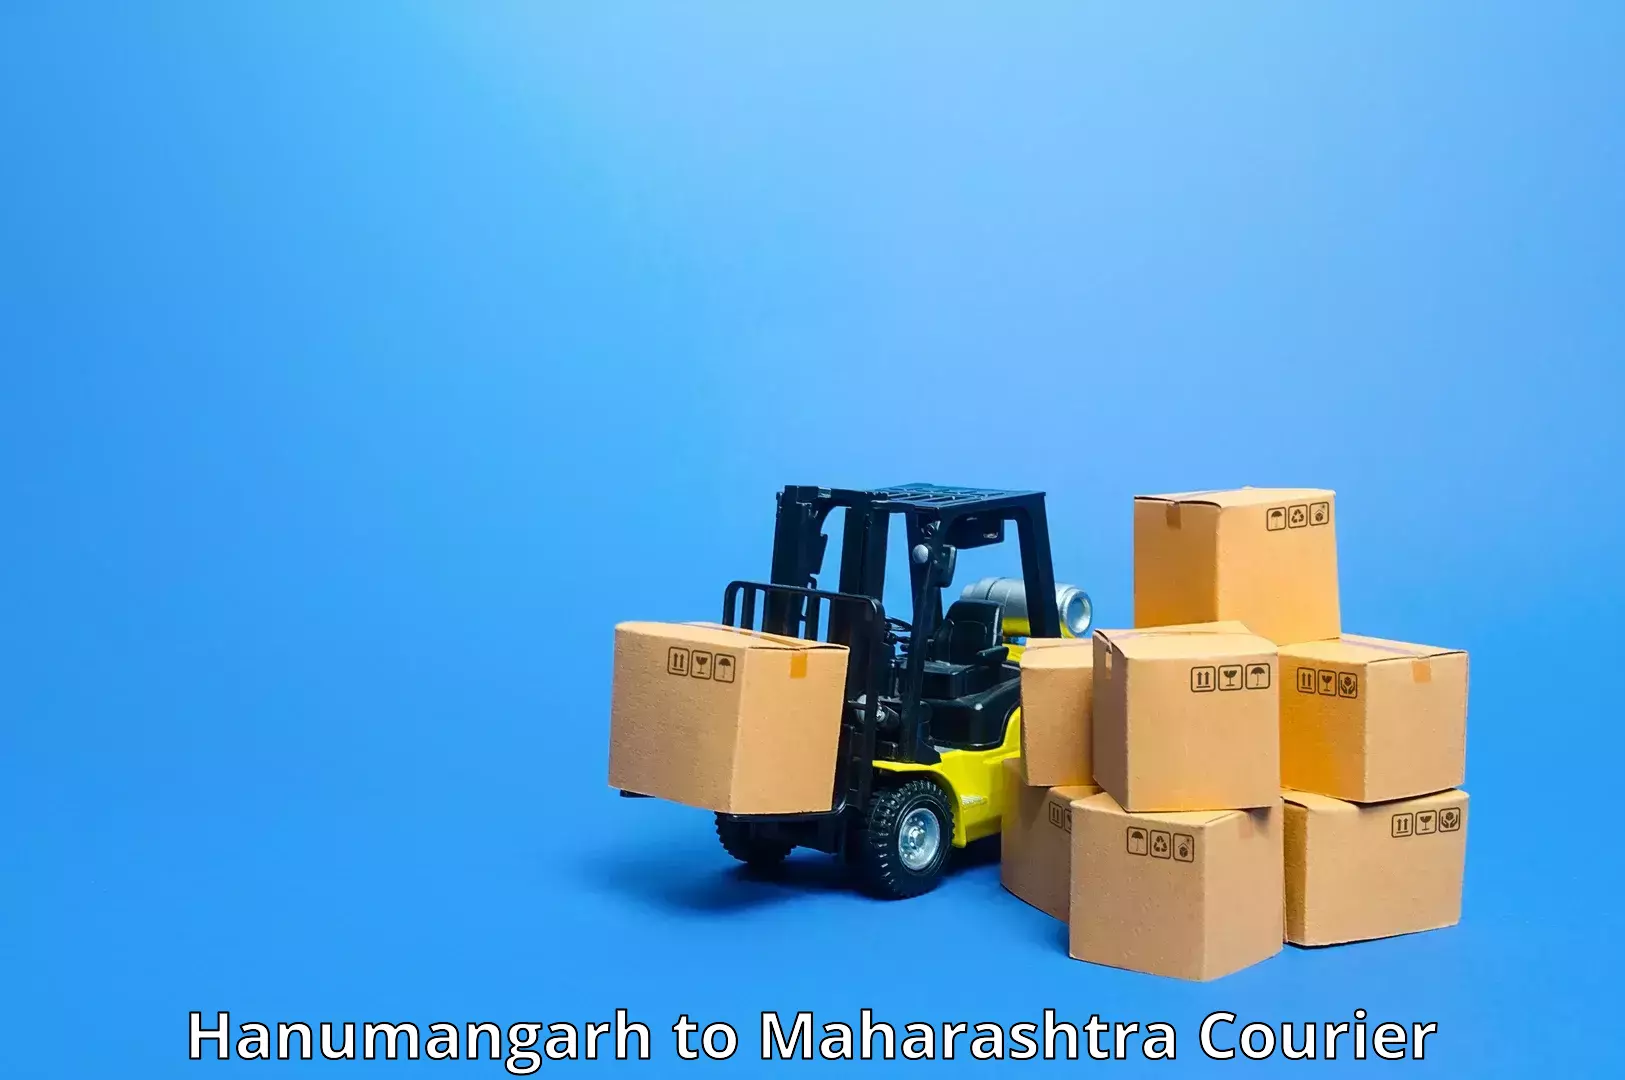 Local delivery service Hanumangarh to Maharashtra